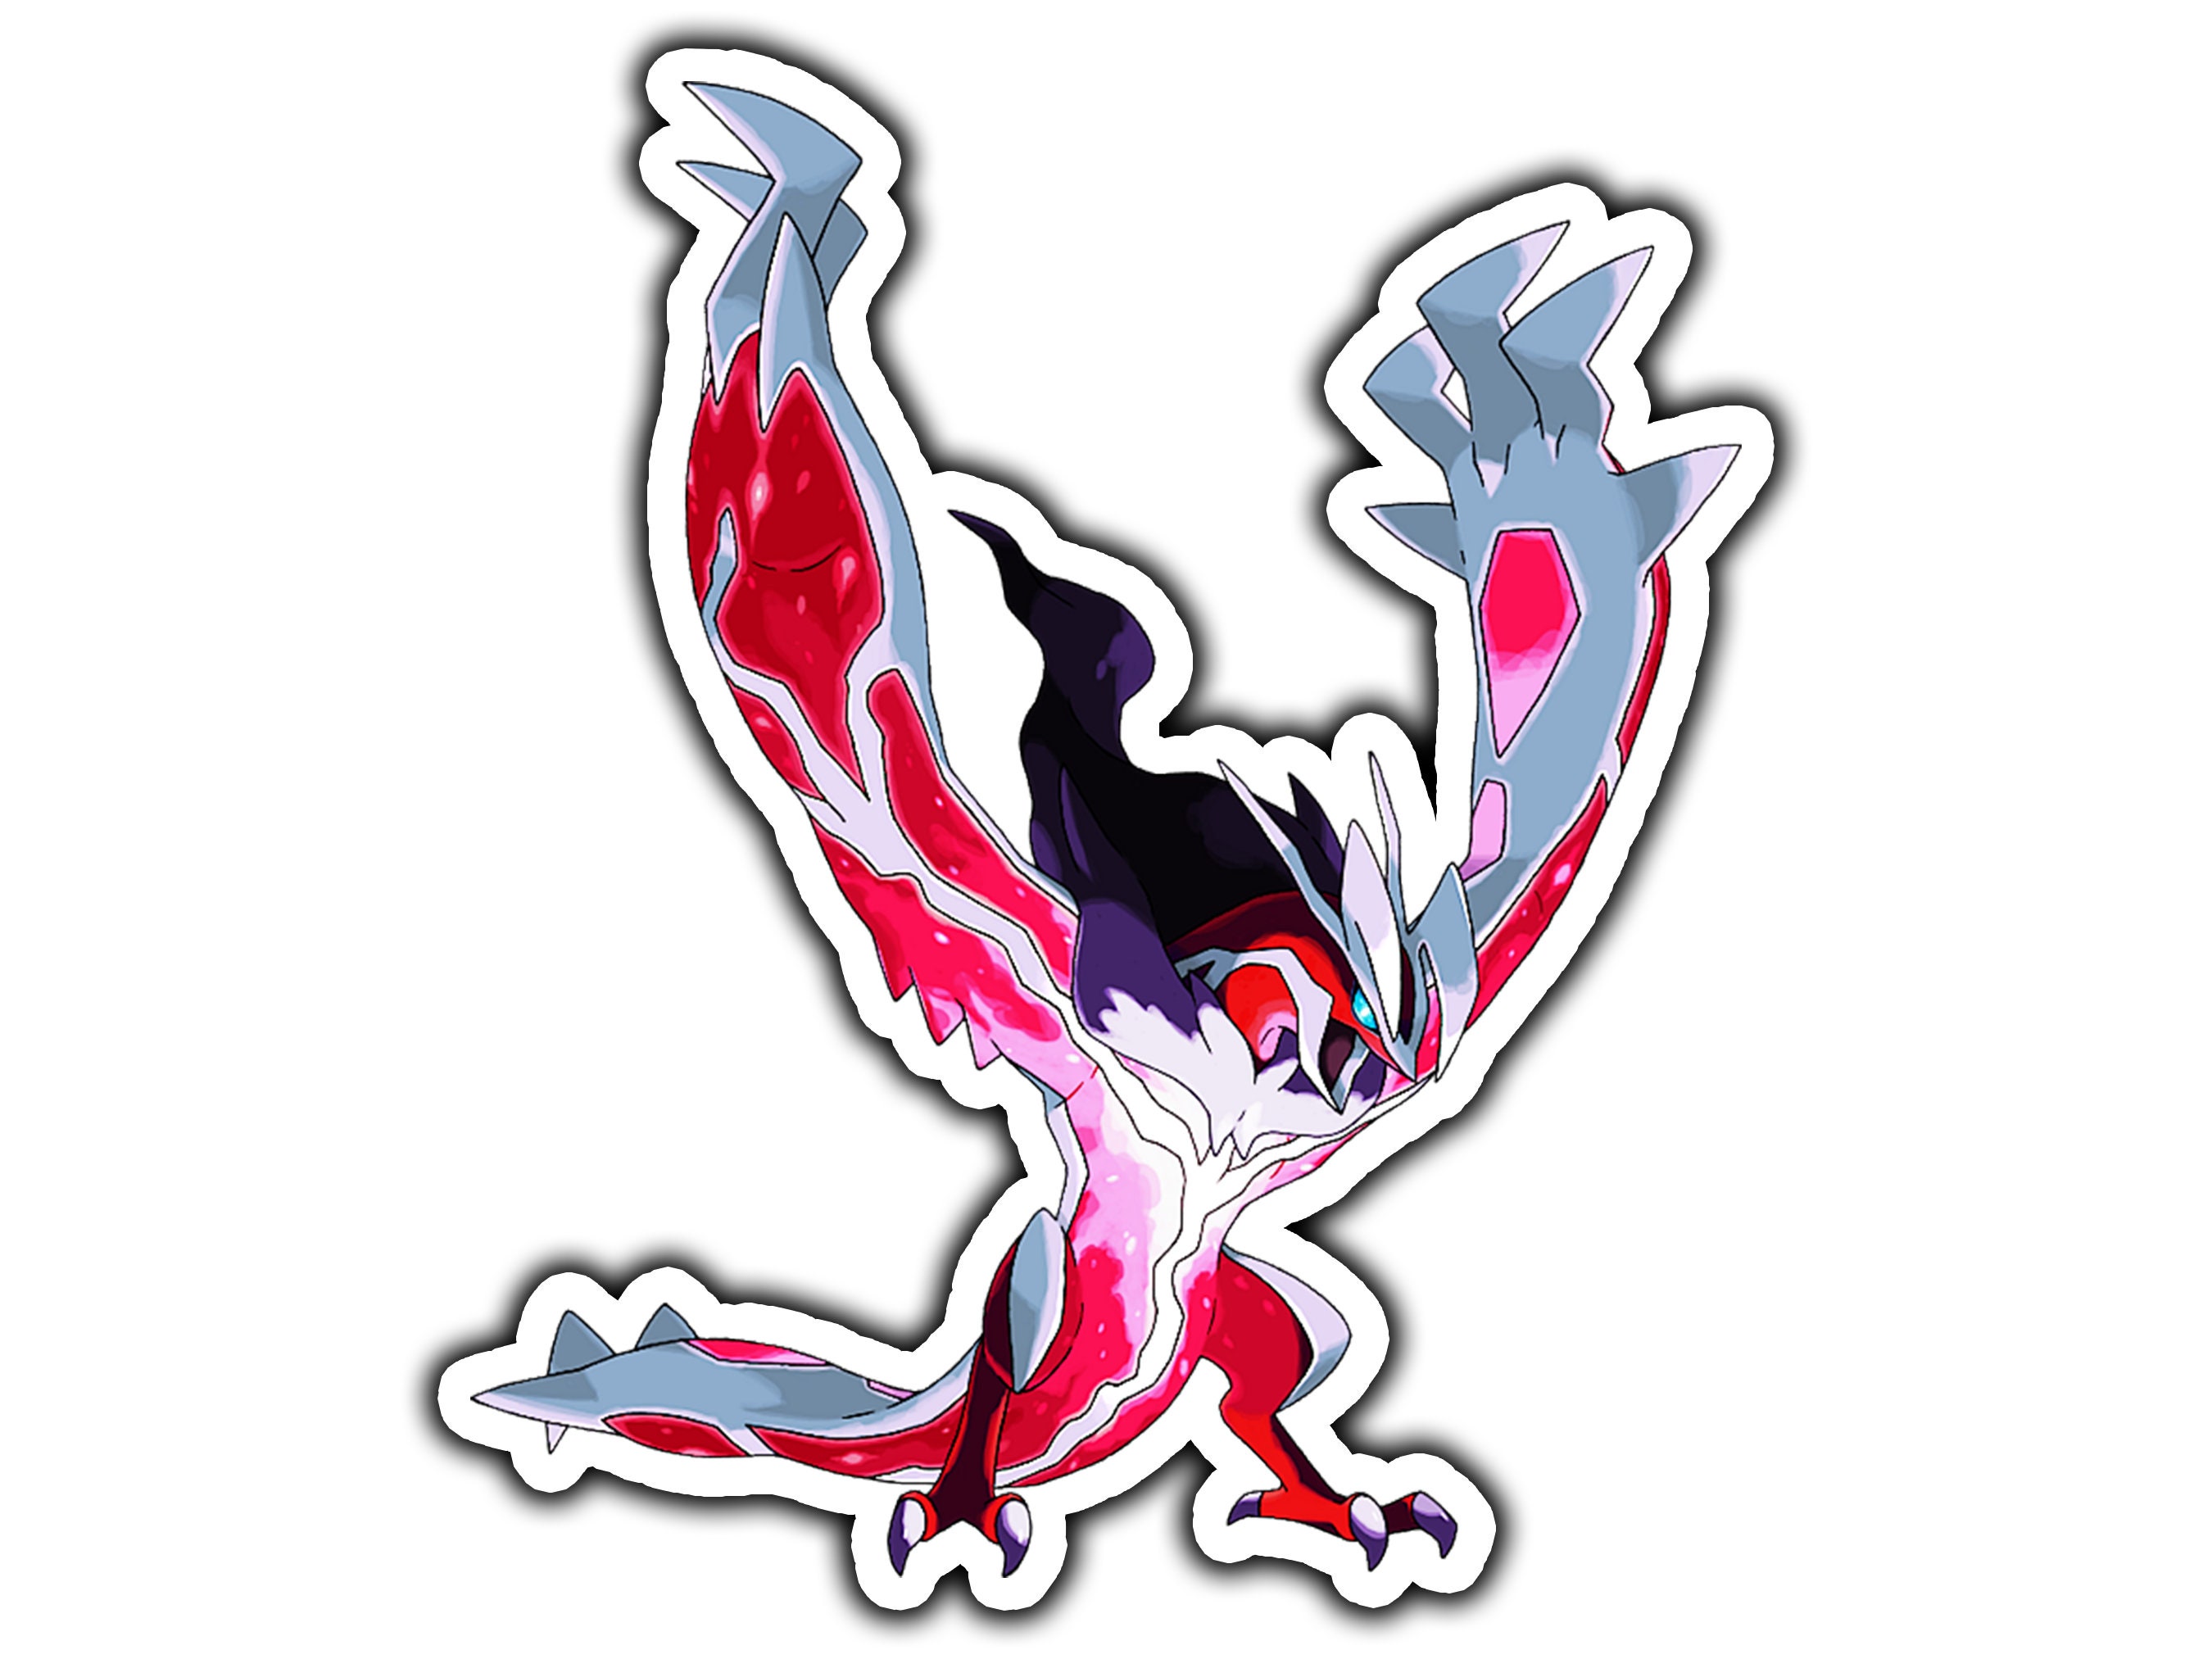 Pokémon Shiny Rayquaza - Mini P T C - 80.000 Stardust